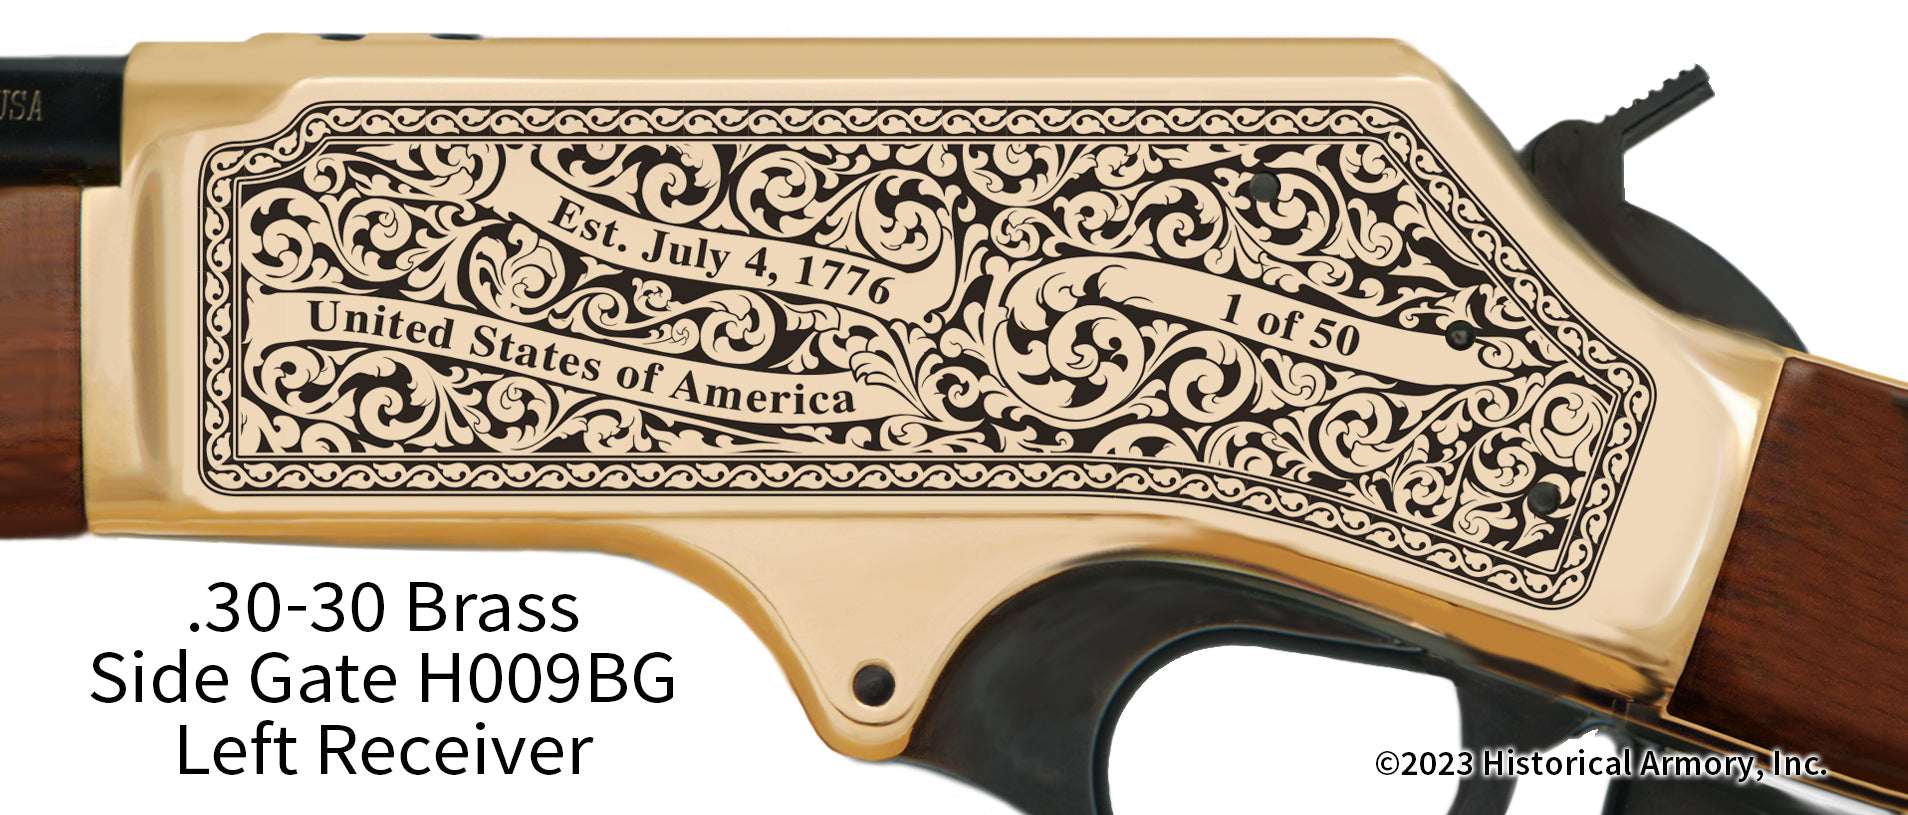 Caddo County Oklahoma Engraved Henry .30-30 Brass Side Gate Rifle